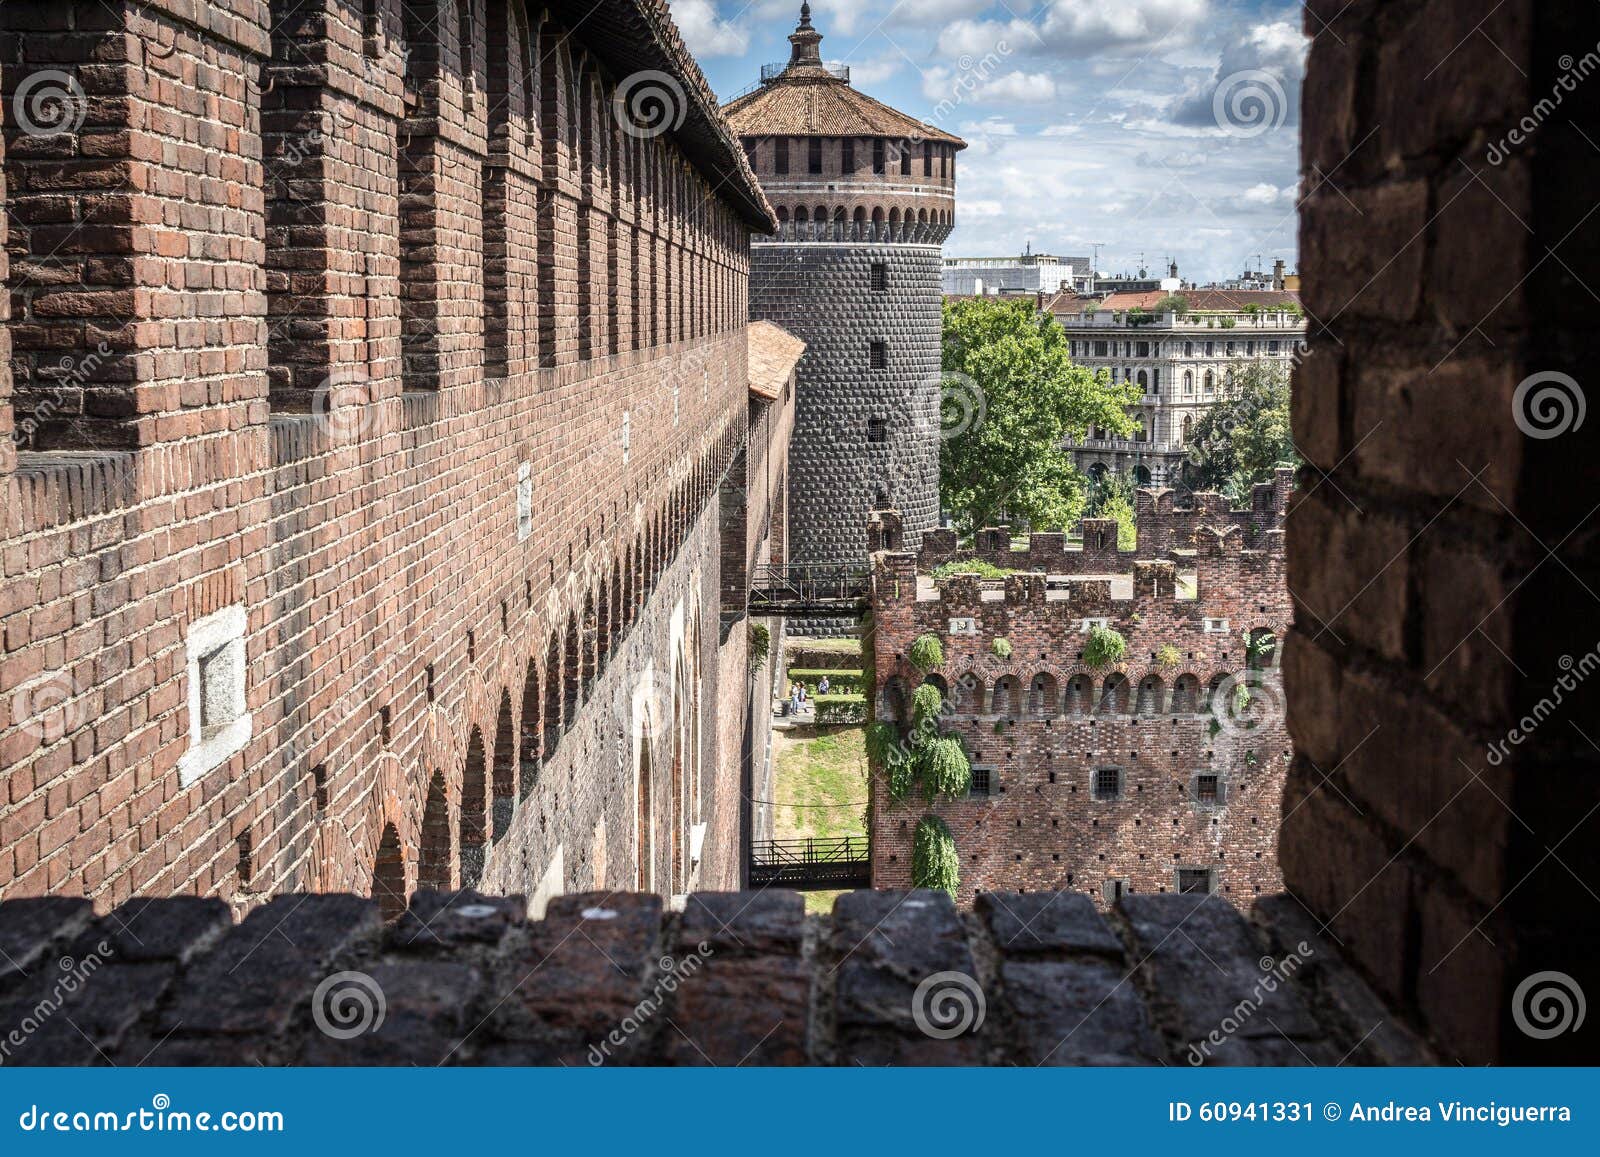 Castello sforzesco Milano stock image. Image of milan ...
